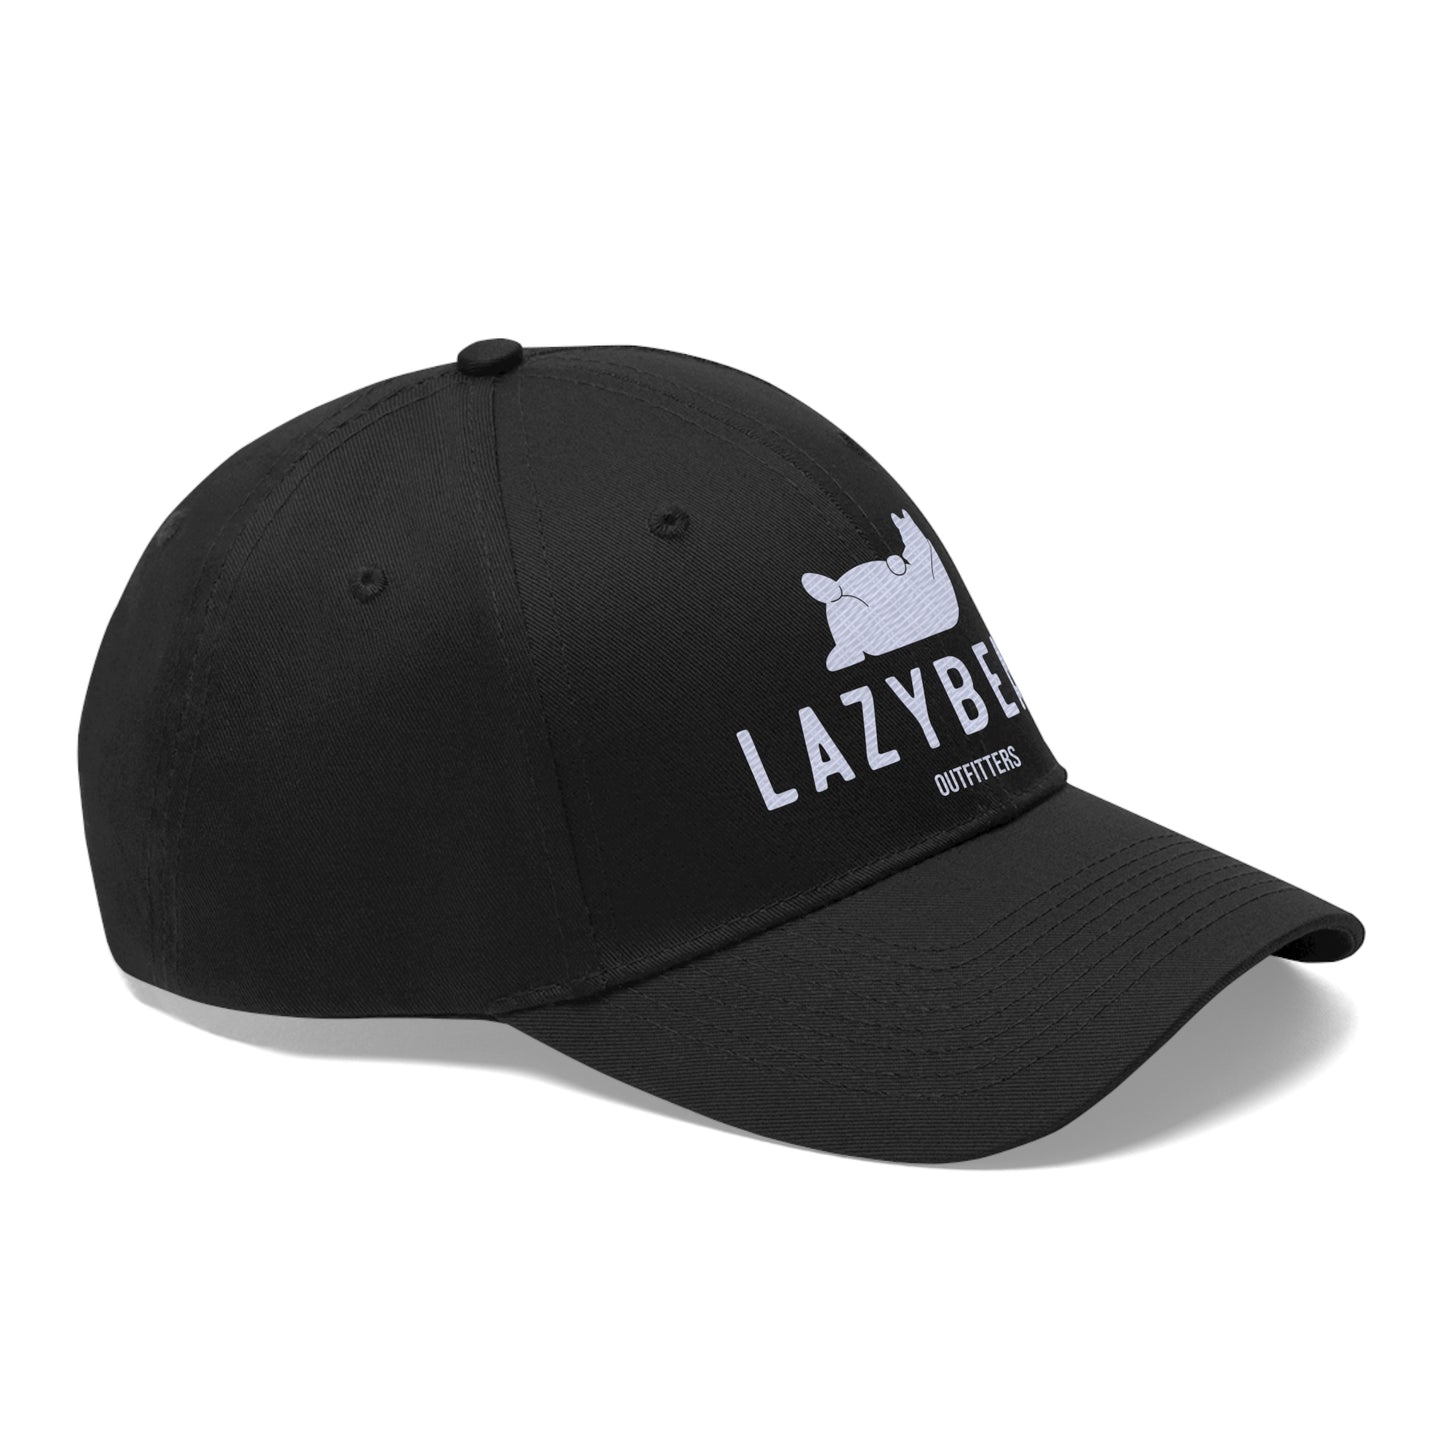 Lazy Bear Unisex Twill Hat